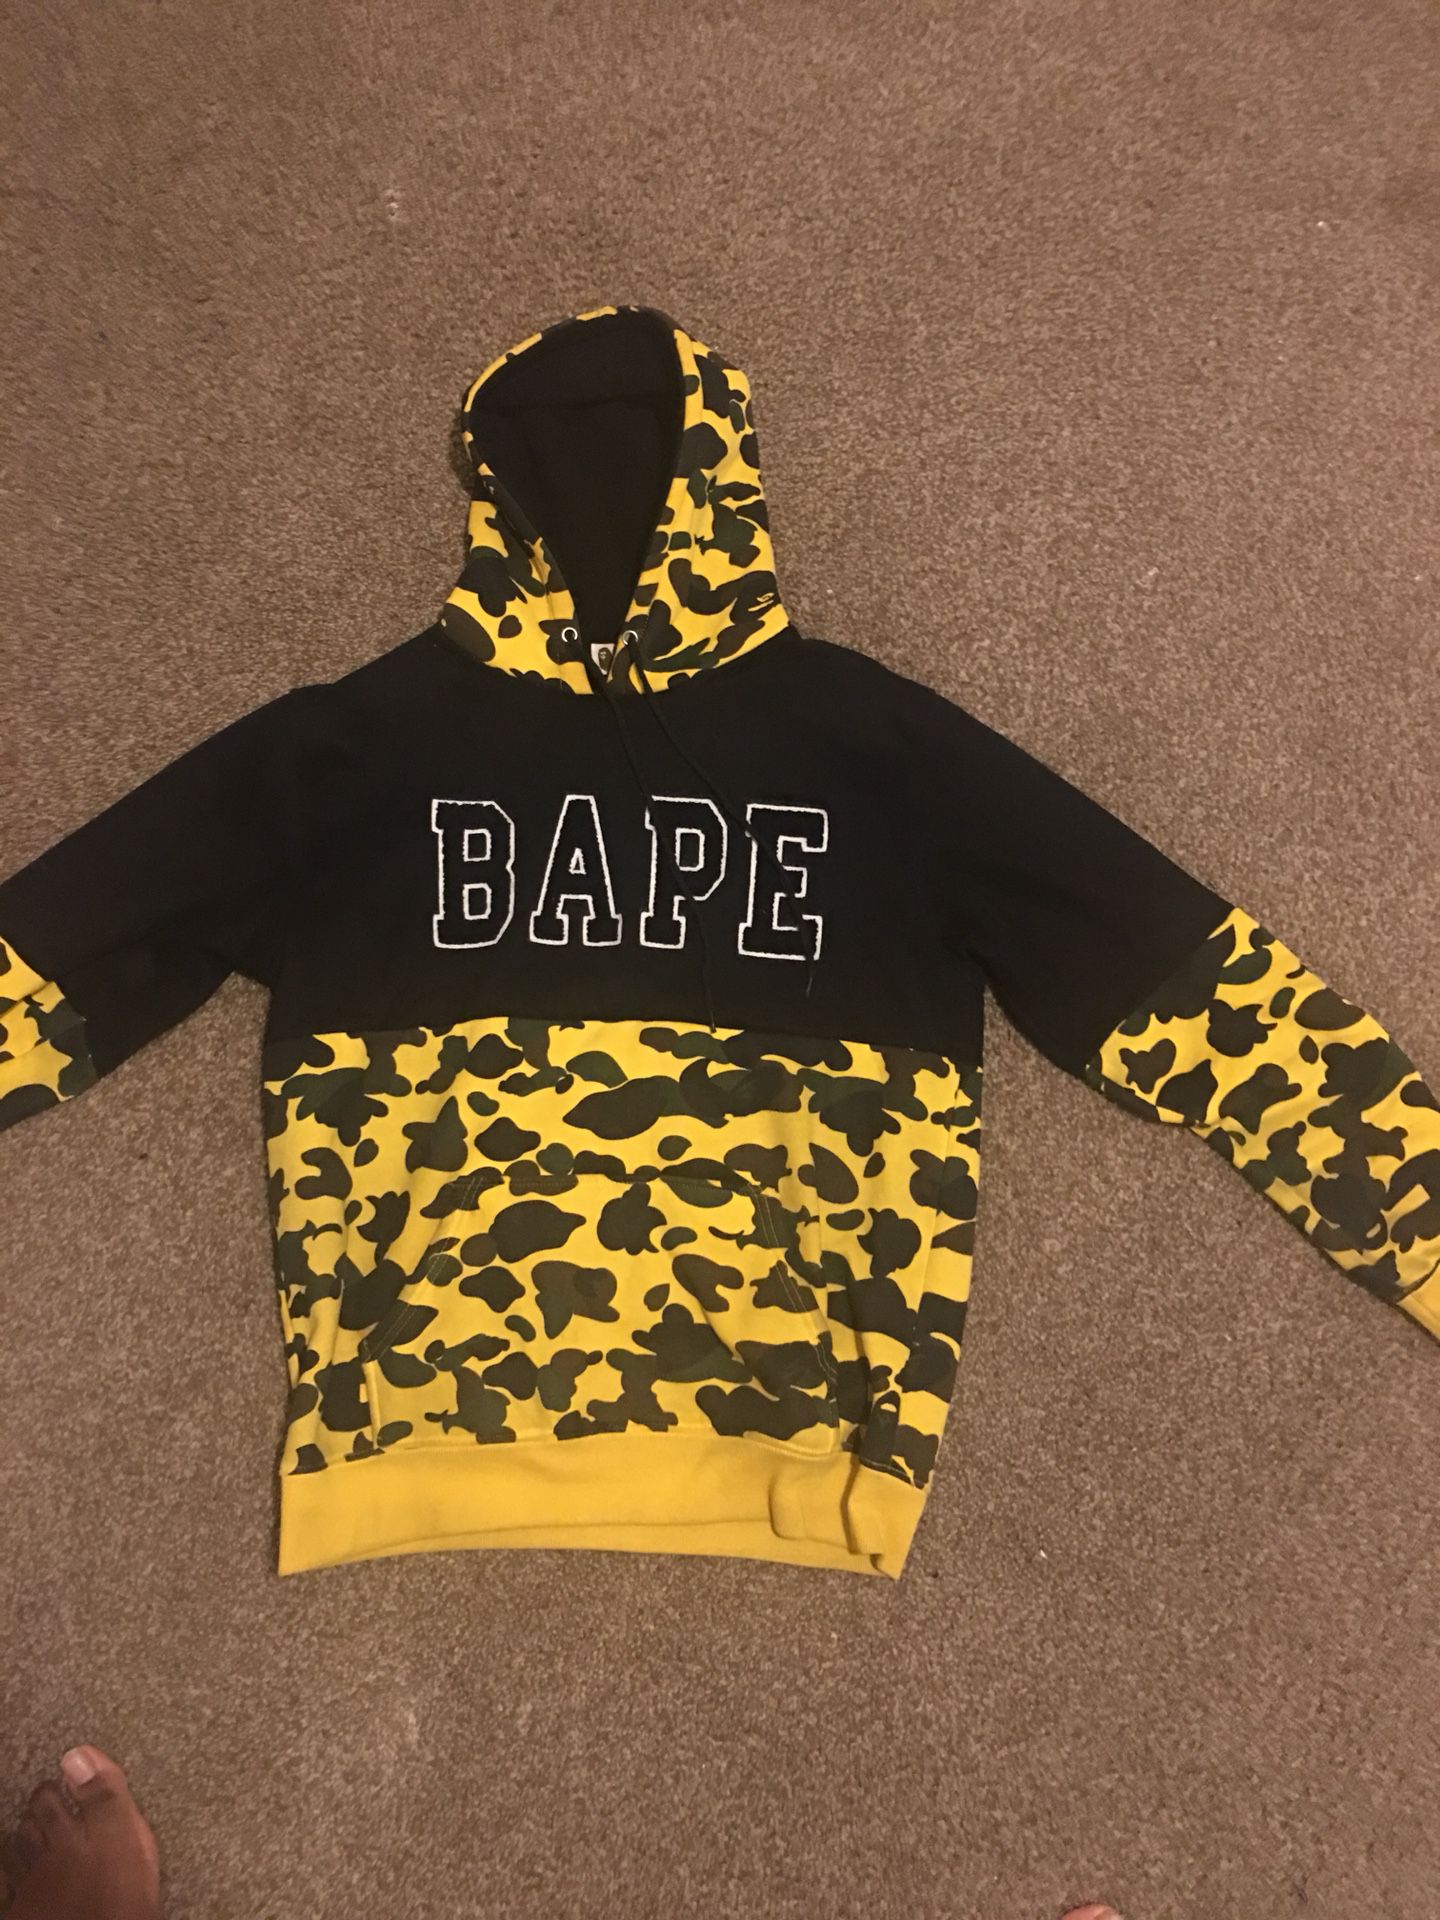 Bape hoodie Size XL but fits like Large